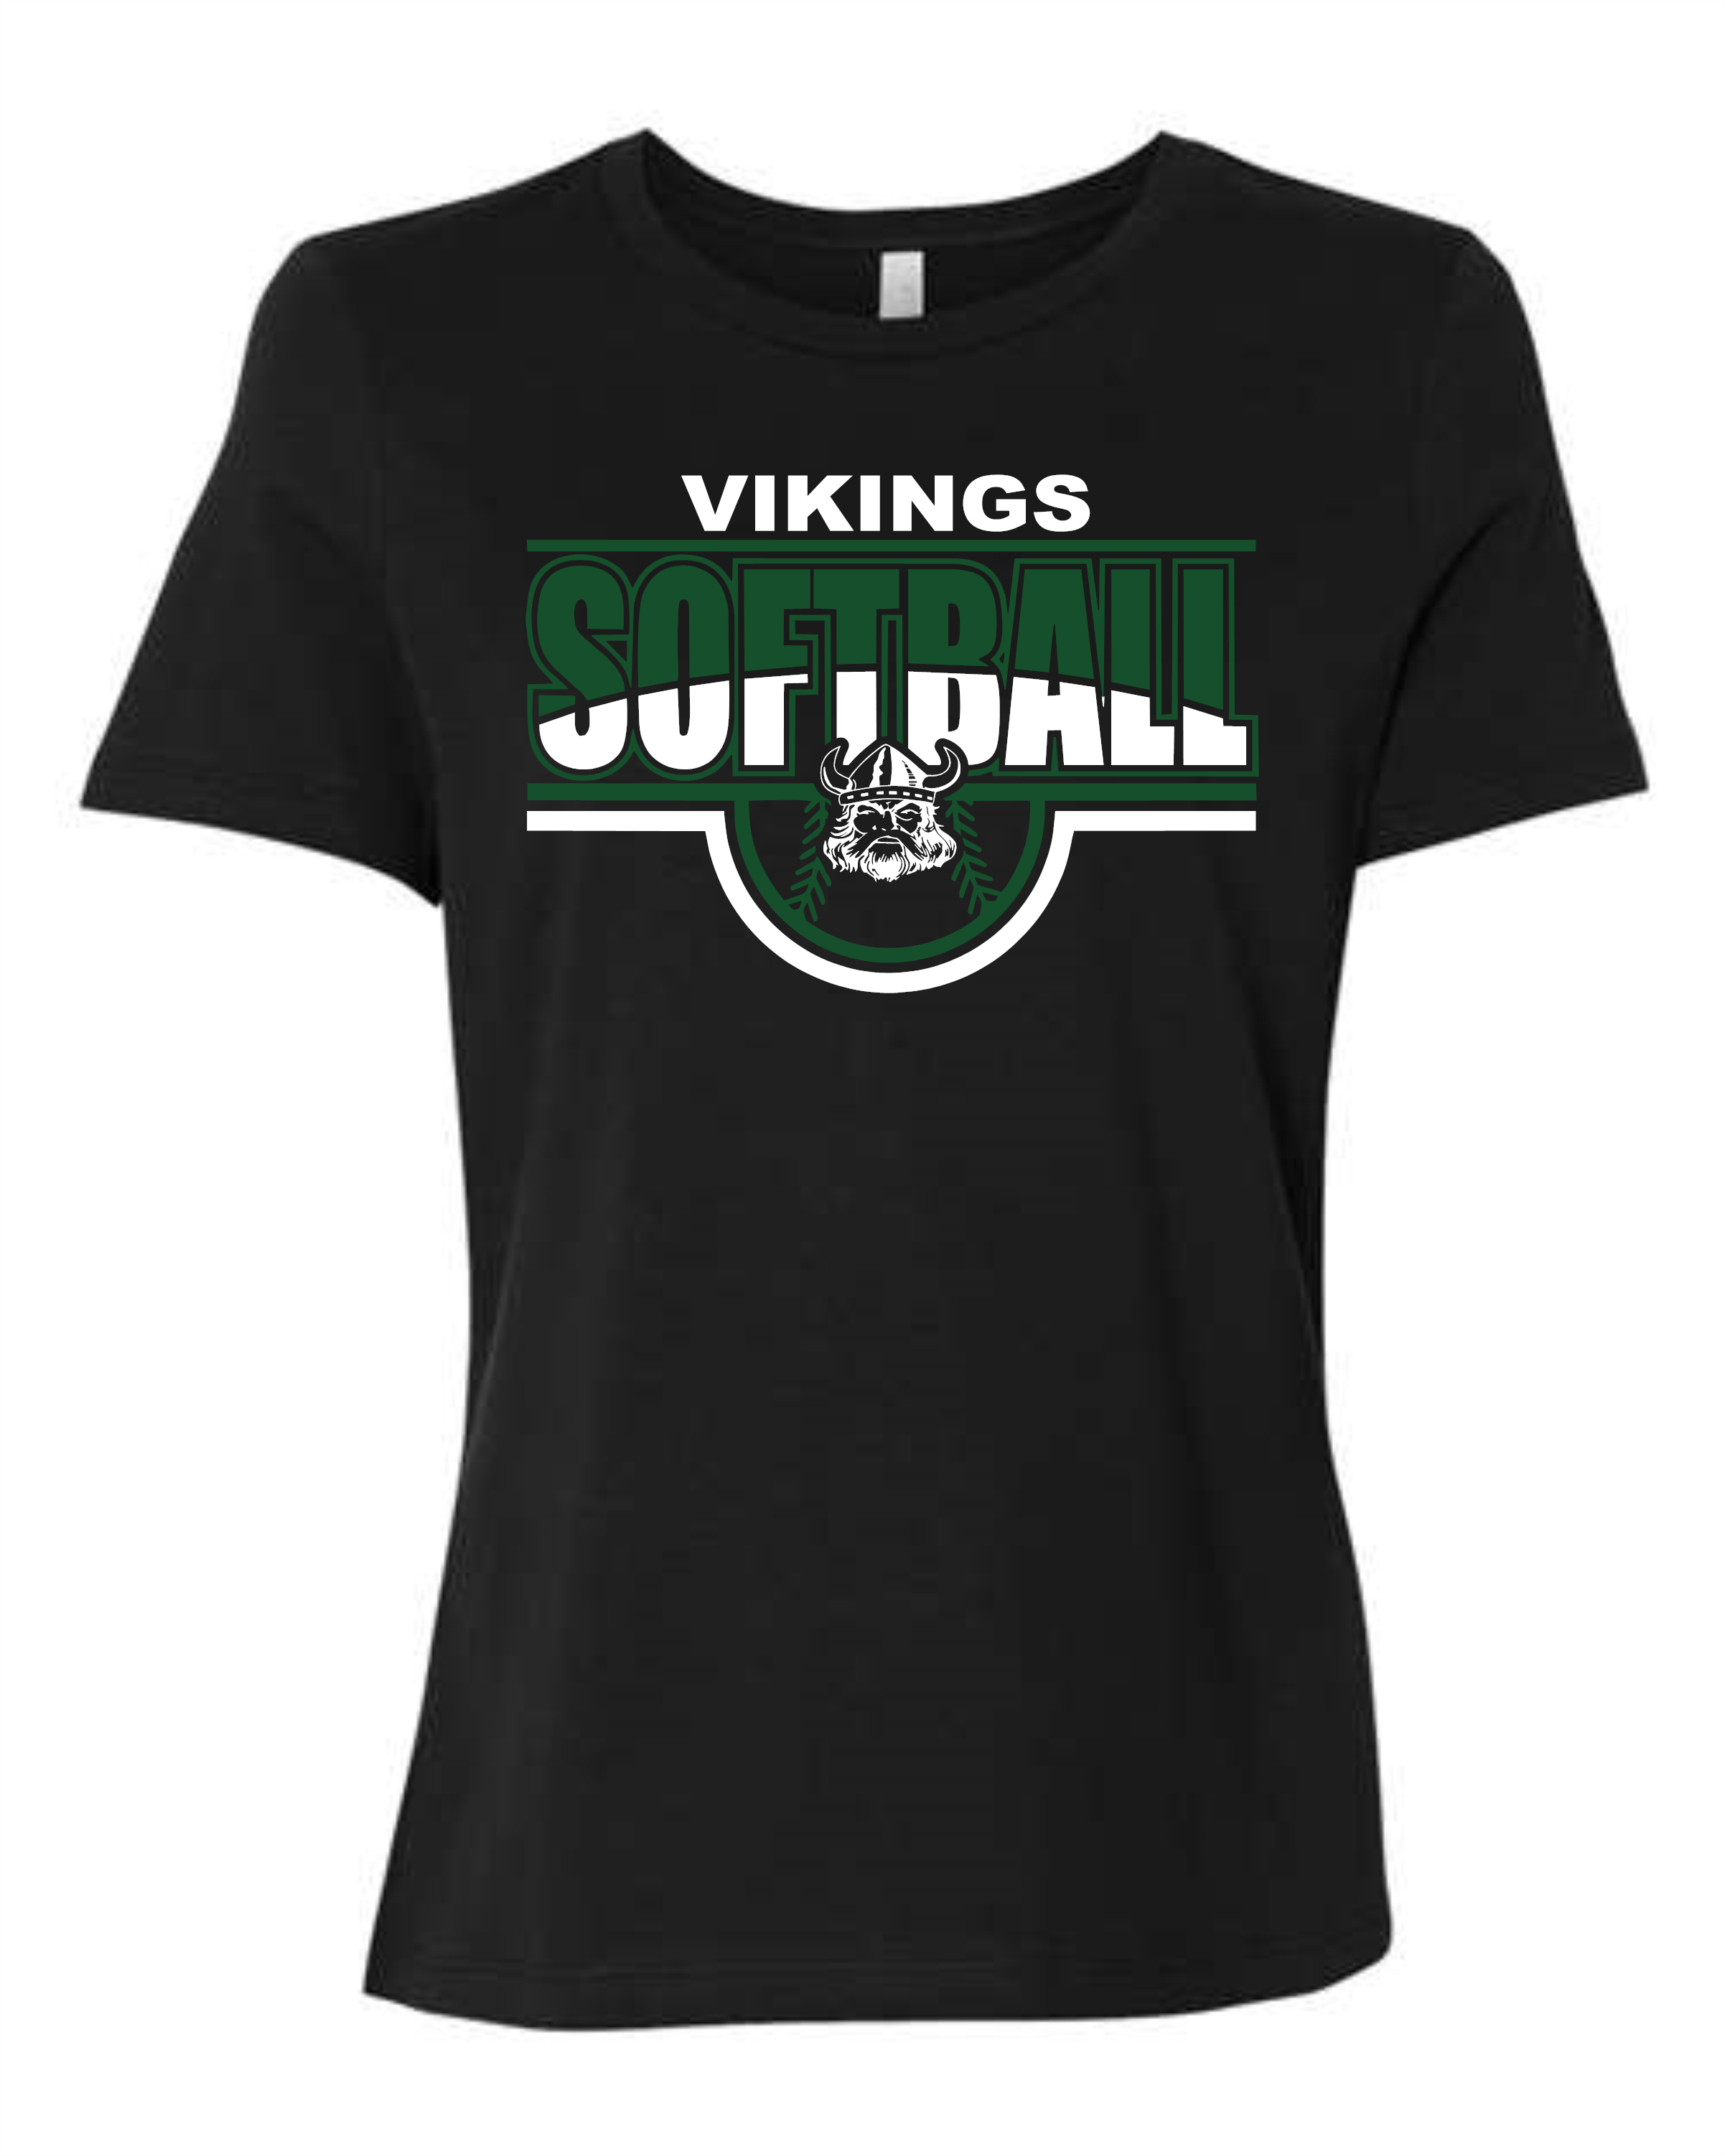 Vikings Softball - Ladies